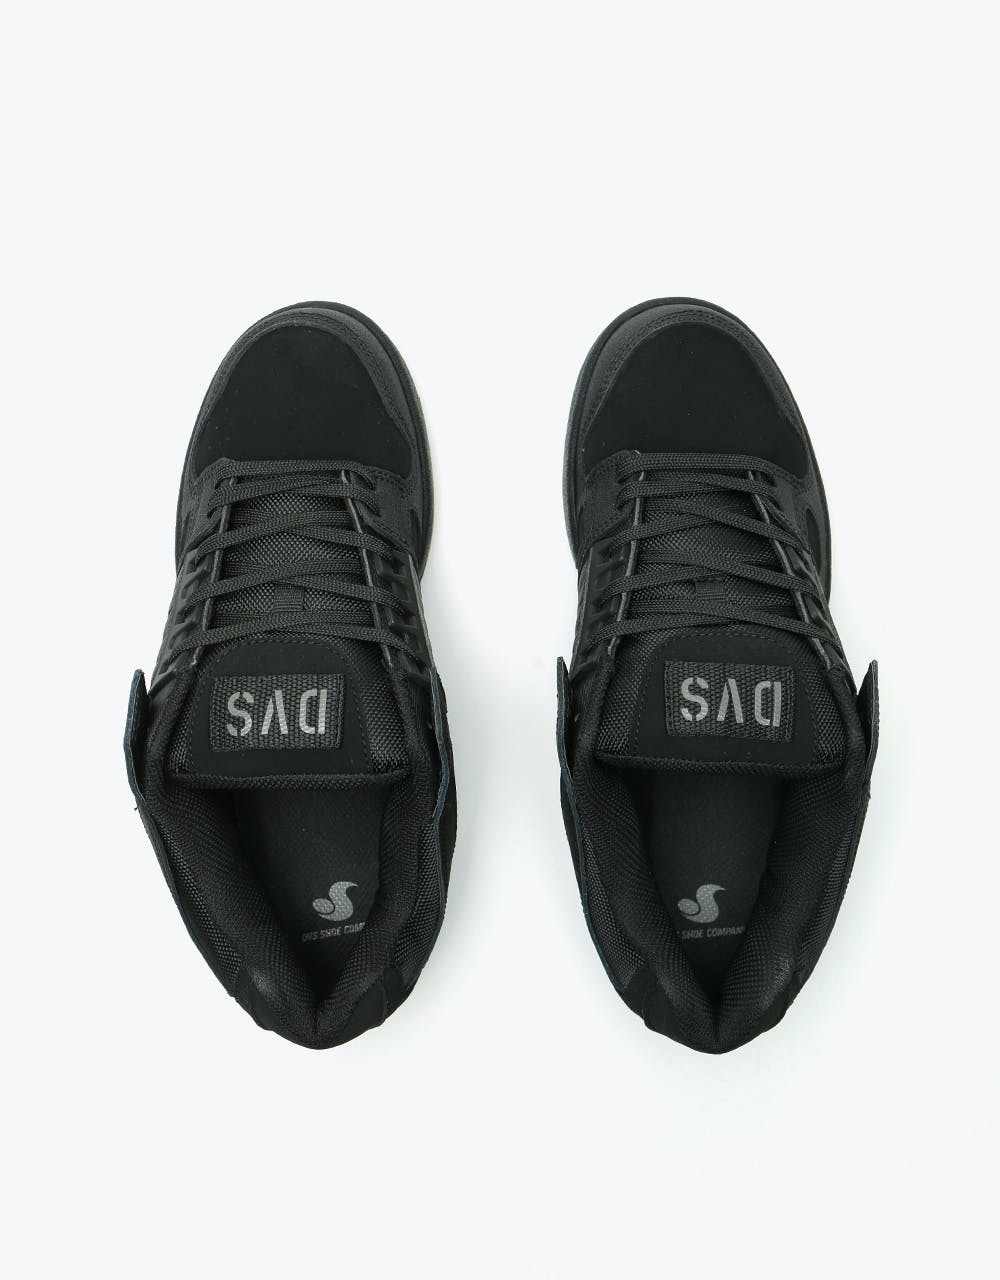 DVS Celsius Skate Shoes - Black/Black Leather